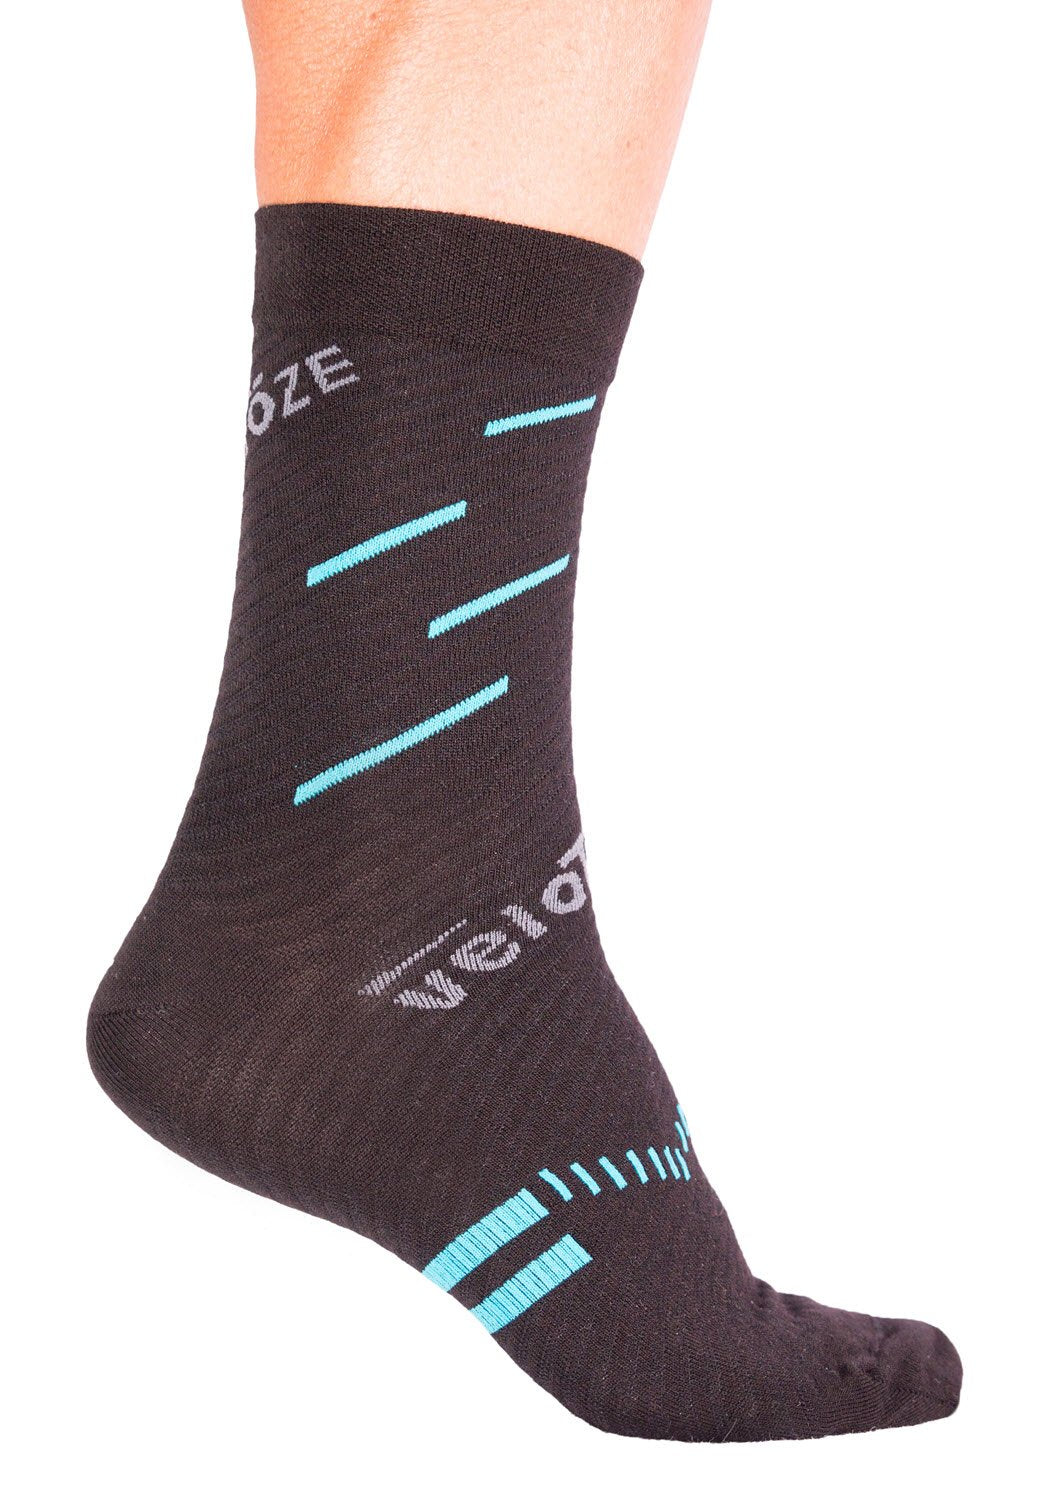 VeloToze Active Compression Wool Sock Black/Blue - S/M